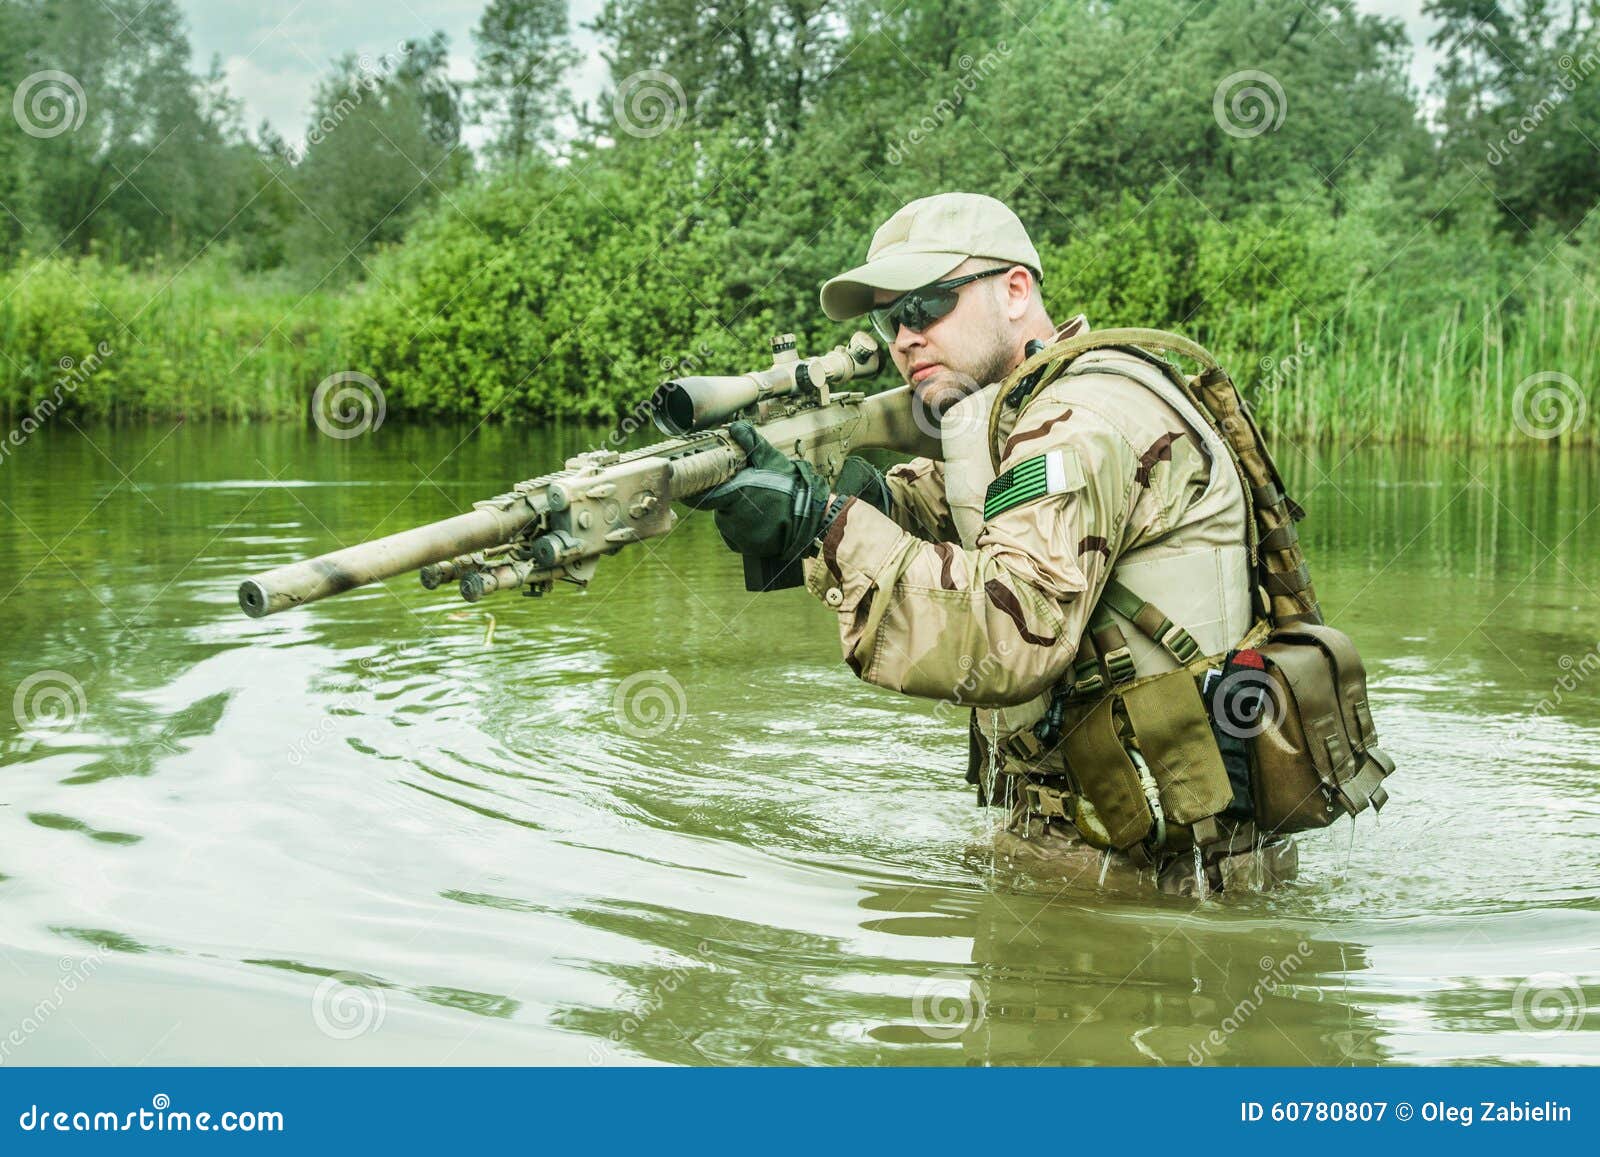 us navy seal sniper rifle